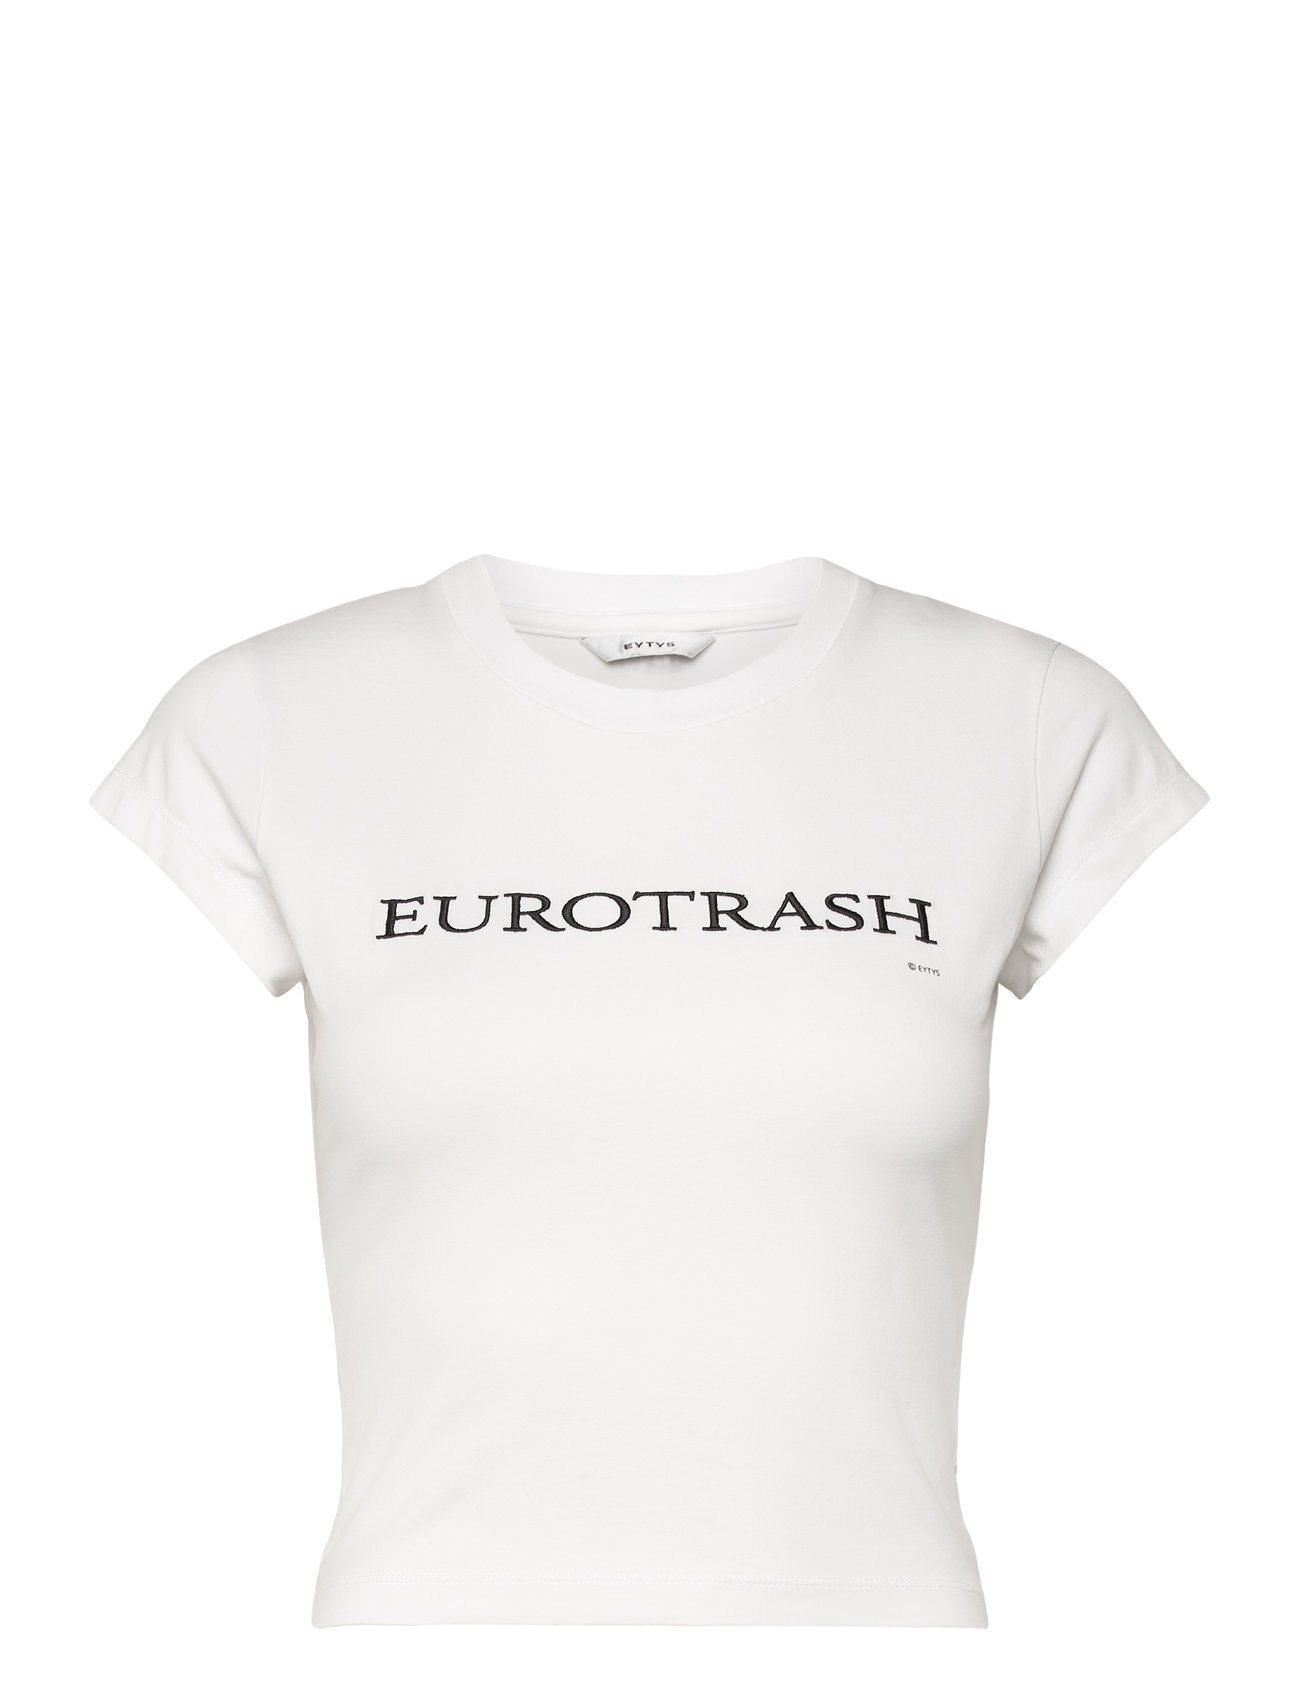 Zion Eurotrash White Designers Crop Tops Short-sleeved Crop Tops White EYTYS